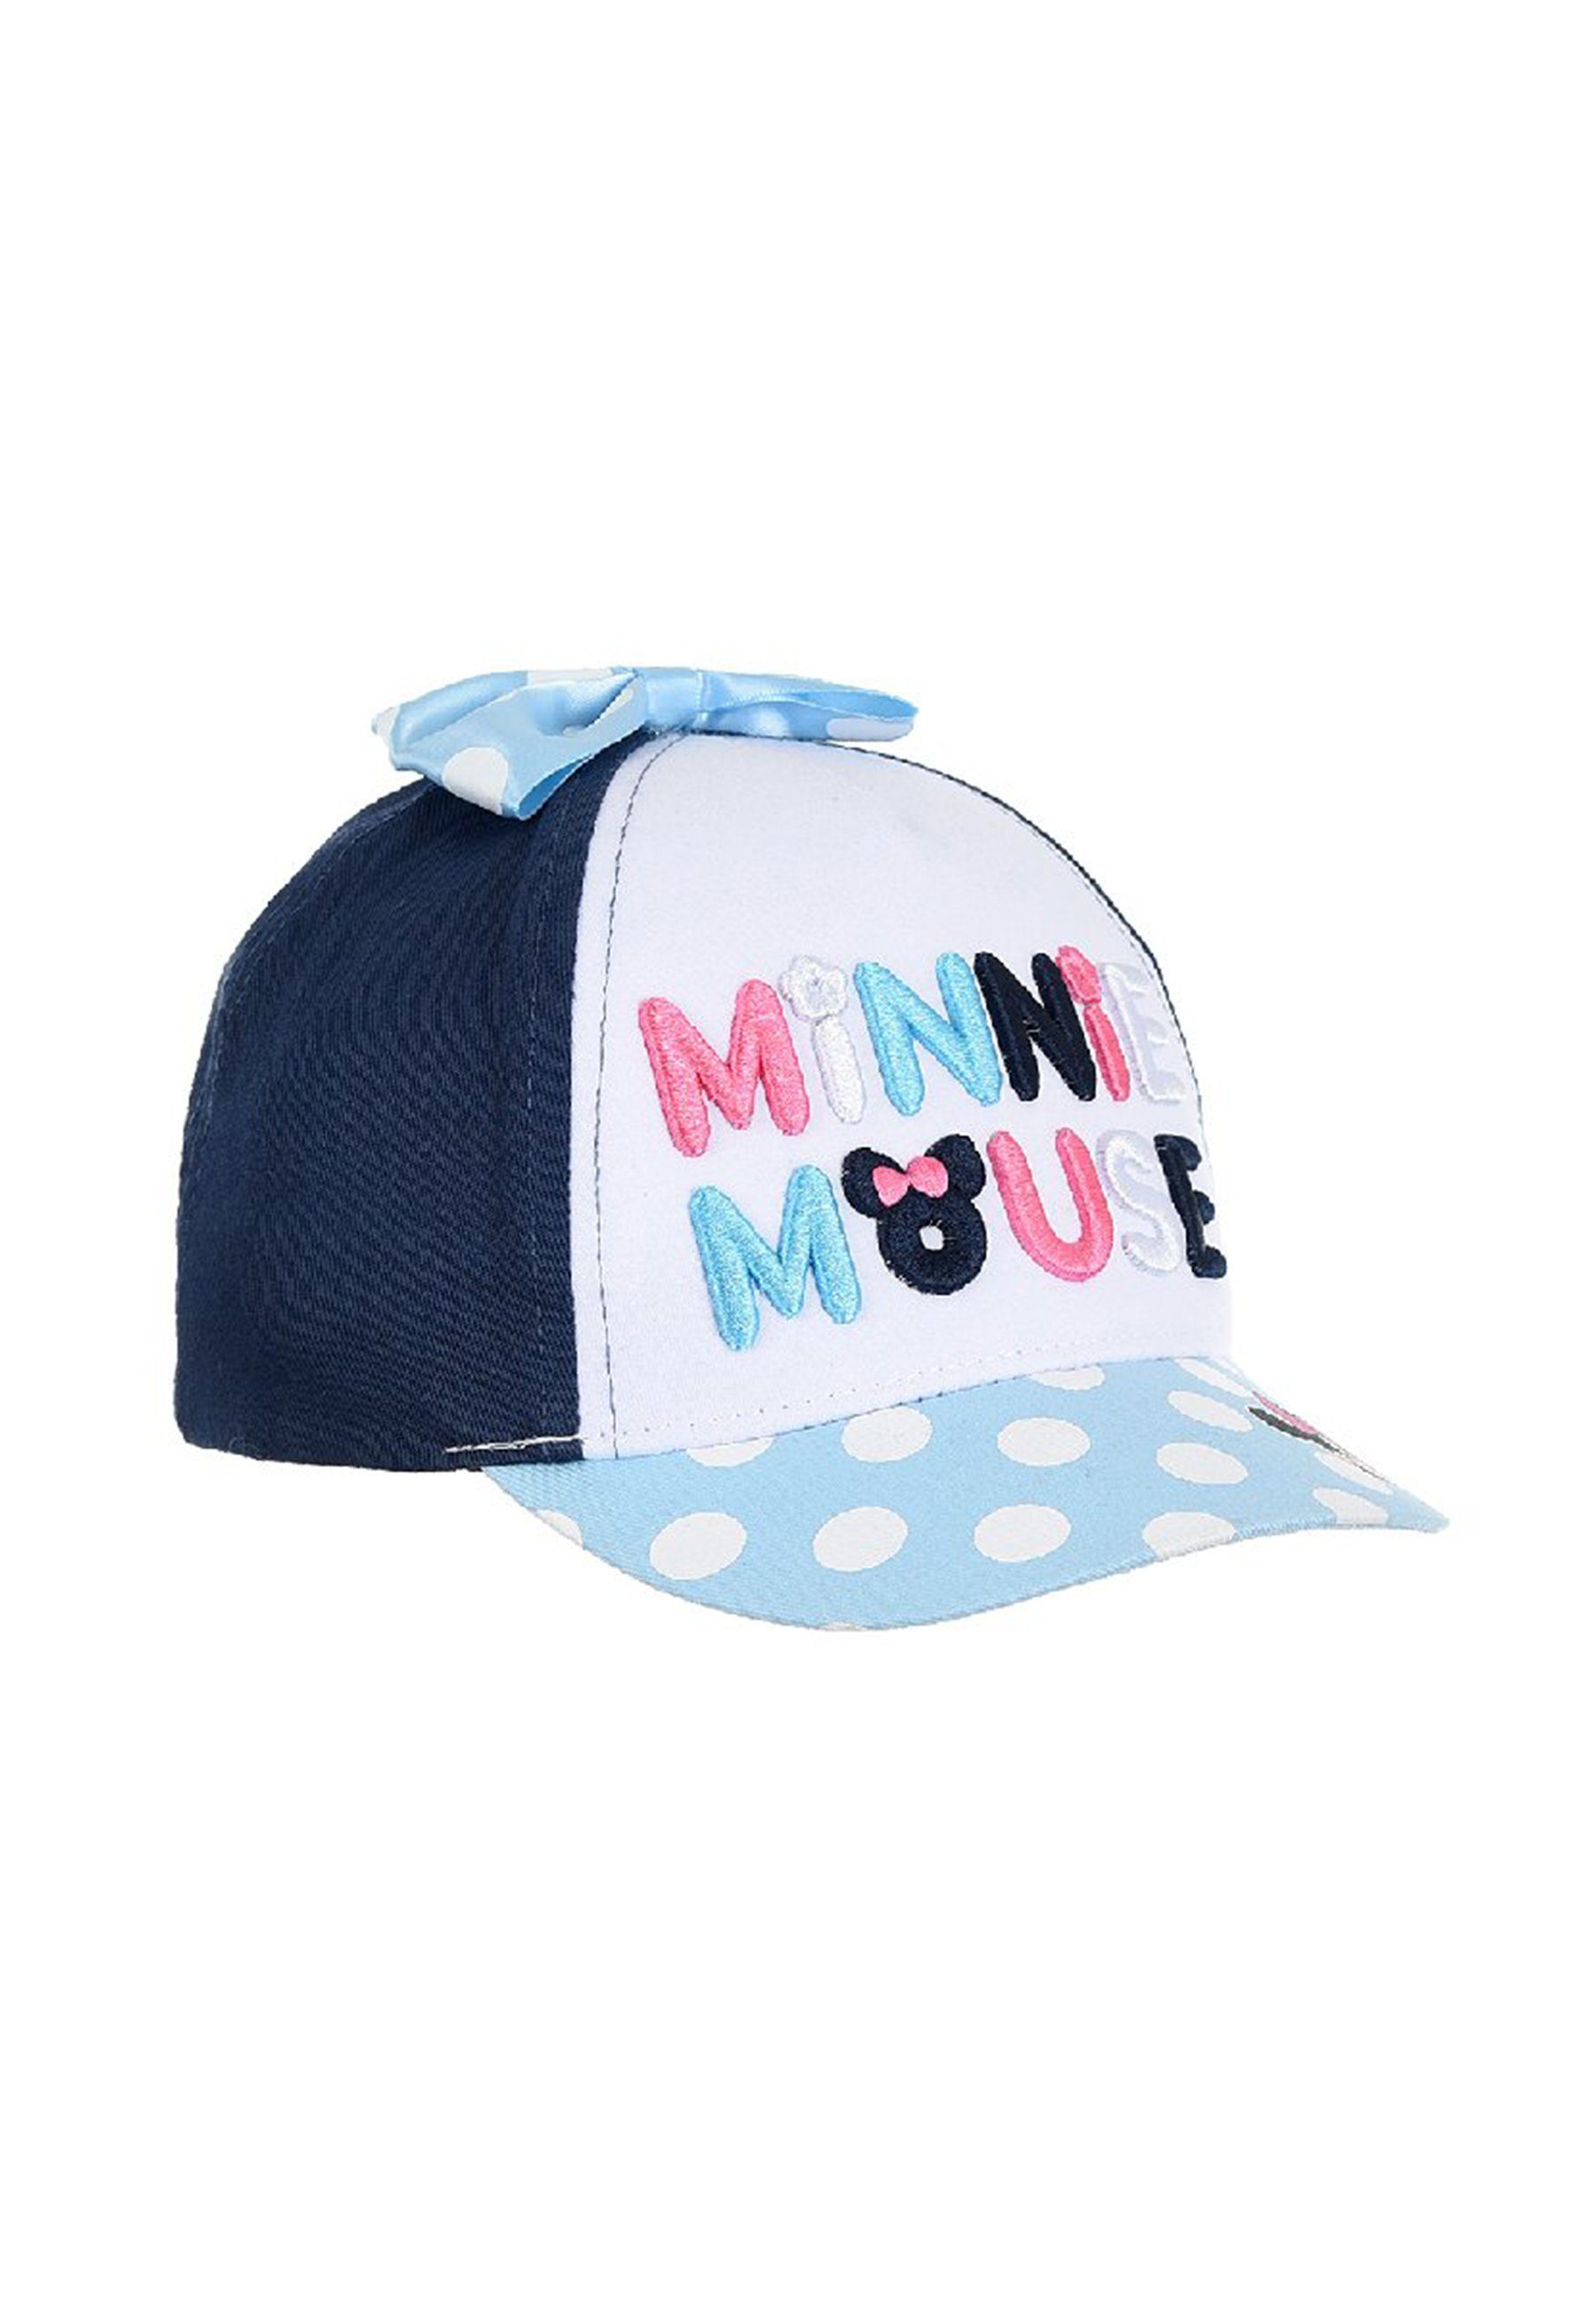 Disney Minnie Baseball Baby Kappe Dunkel-Blau Schirmmütze Mouse Mütze Cap Cap Mädchen